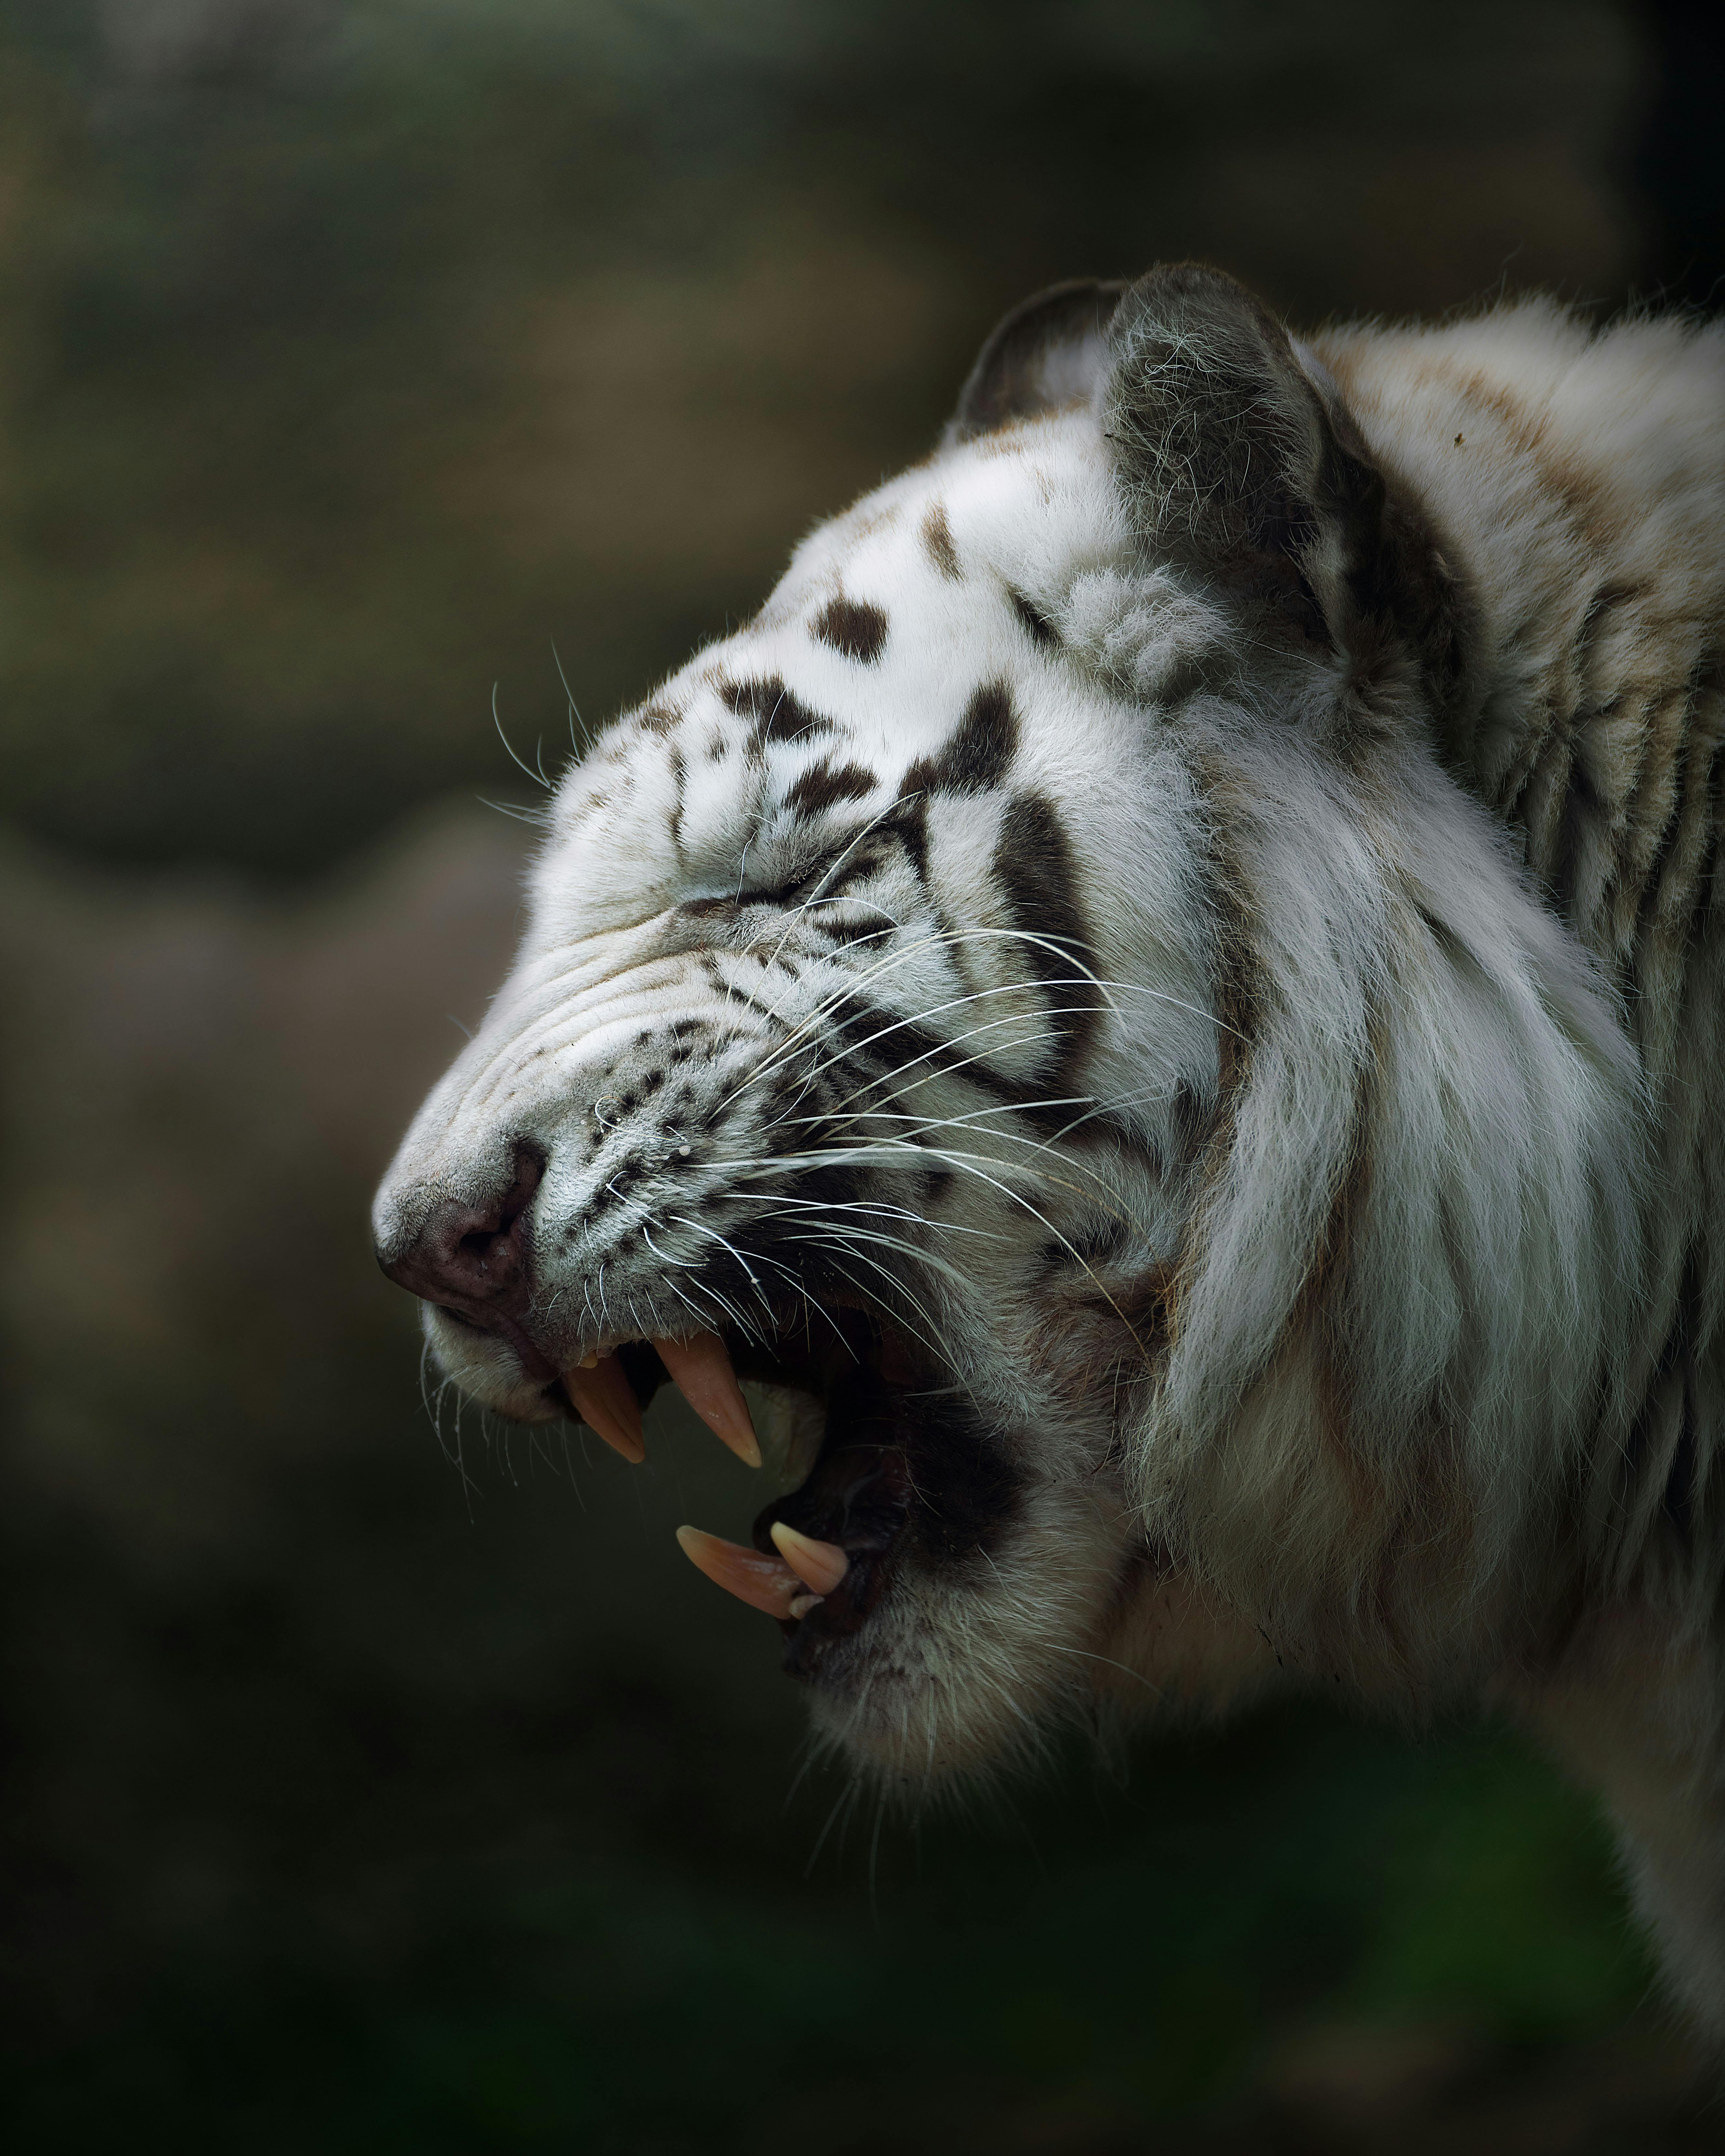 white tiger growl